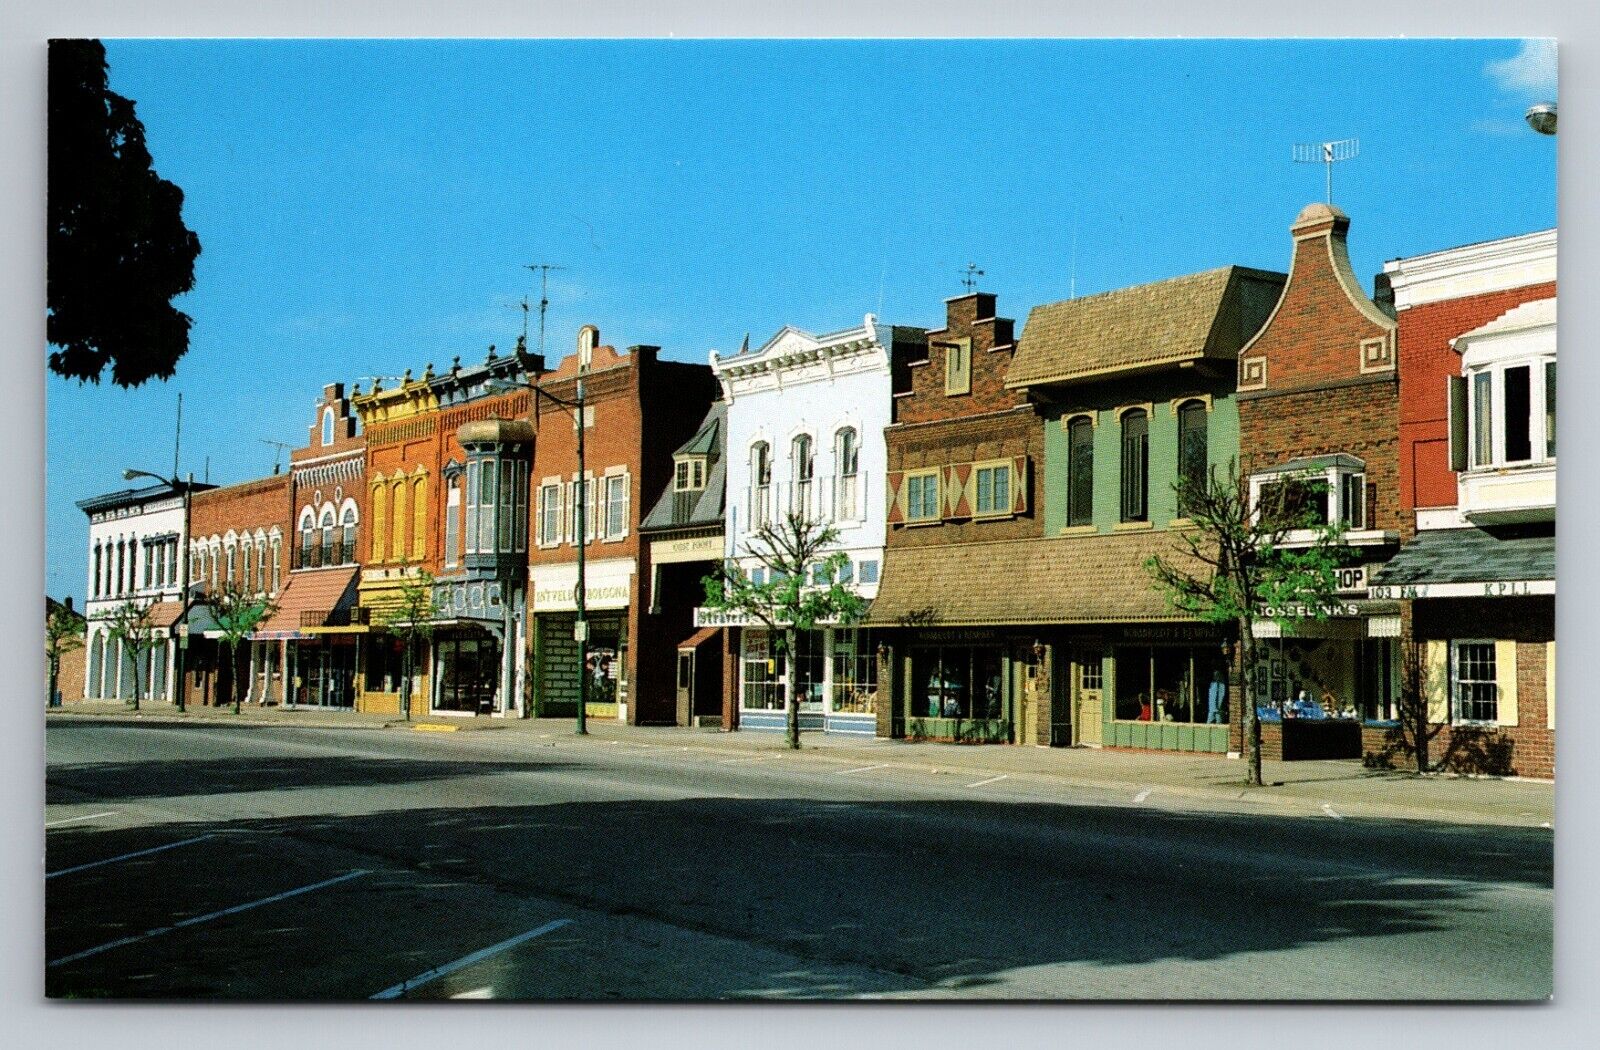 Dutch Architecture Business District Pella Iowa Vintage Unposted Postcard